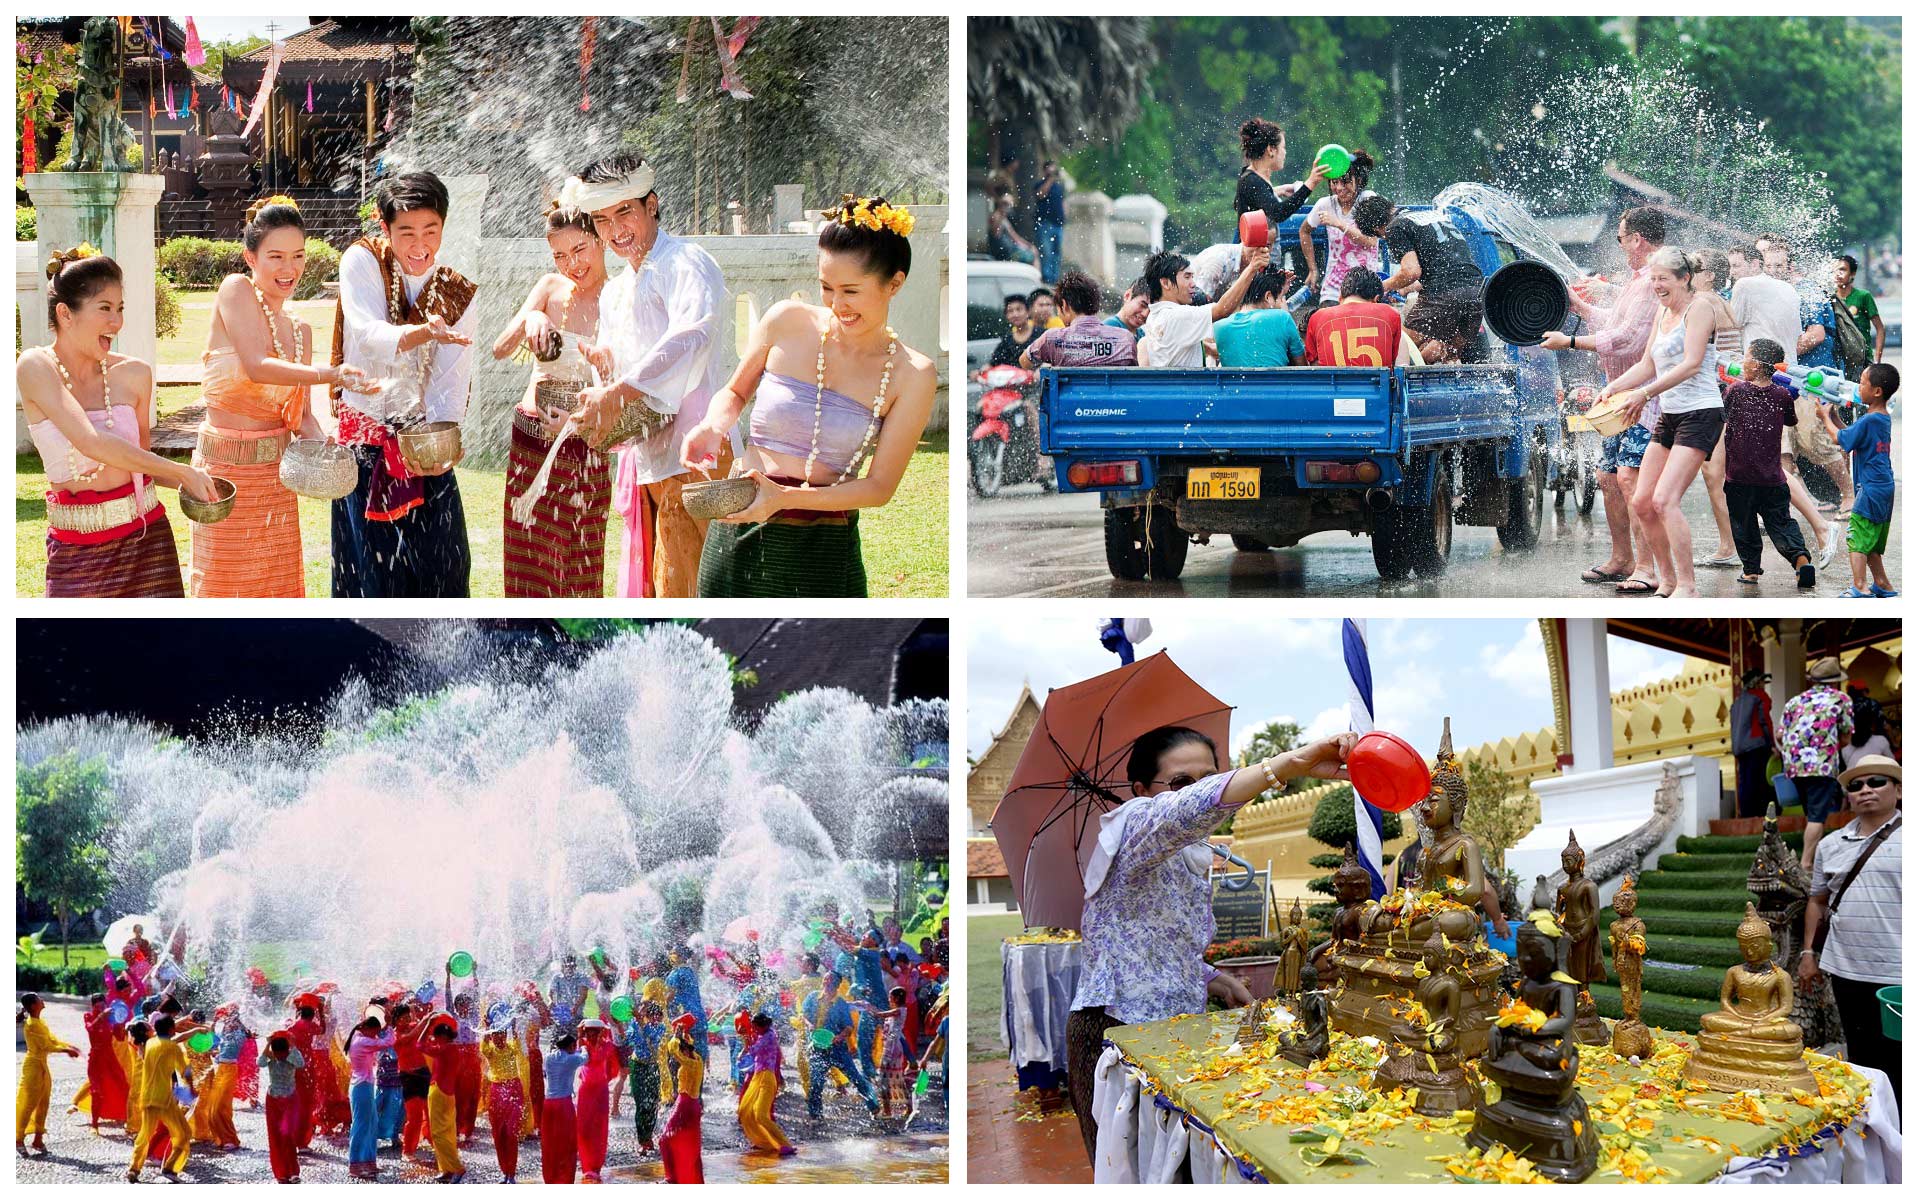 Lao New Year Festival